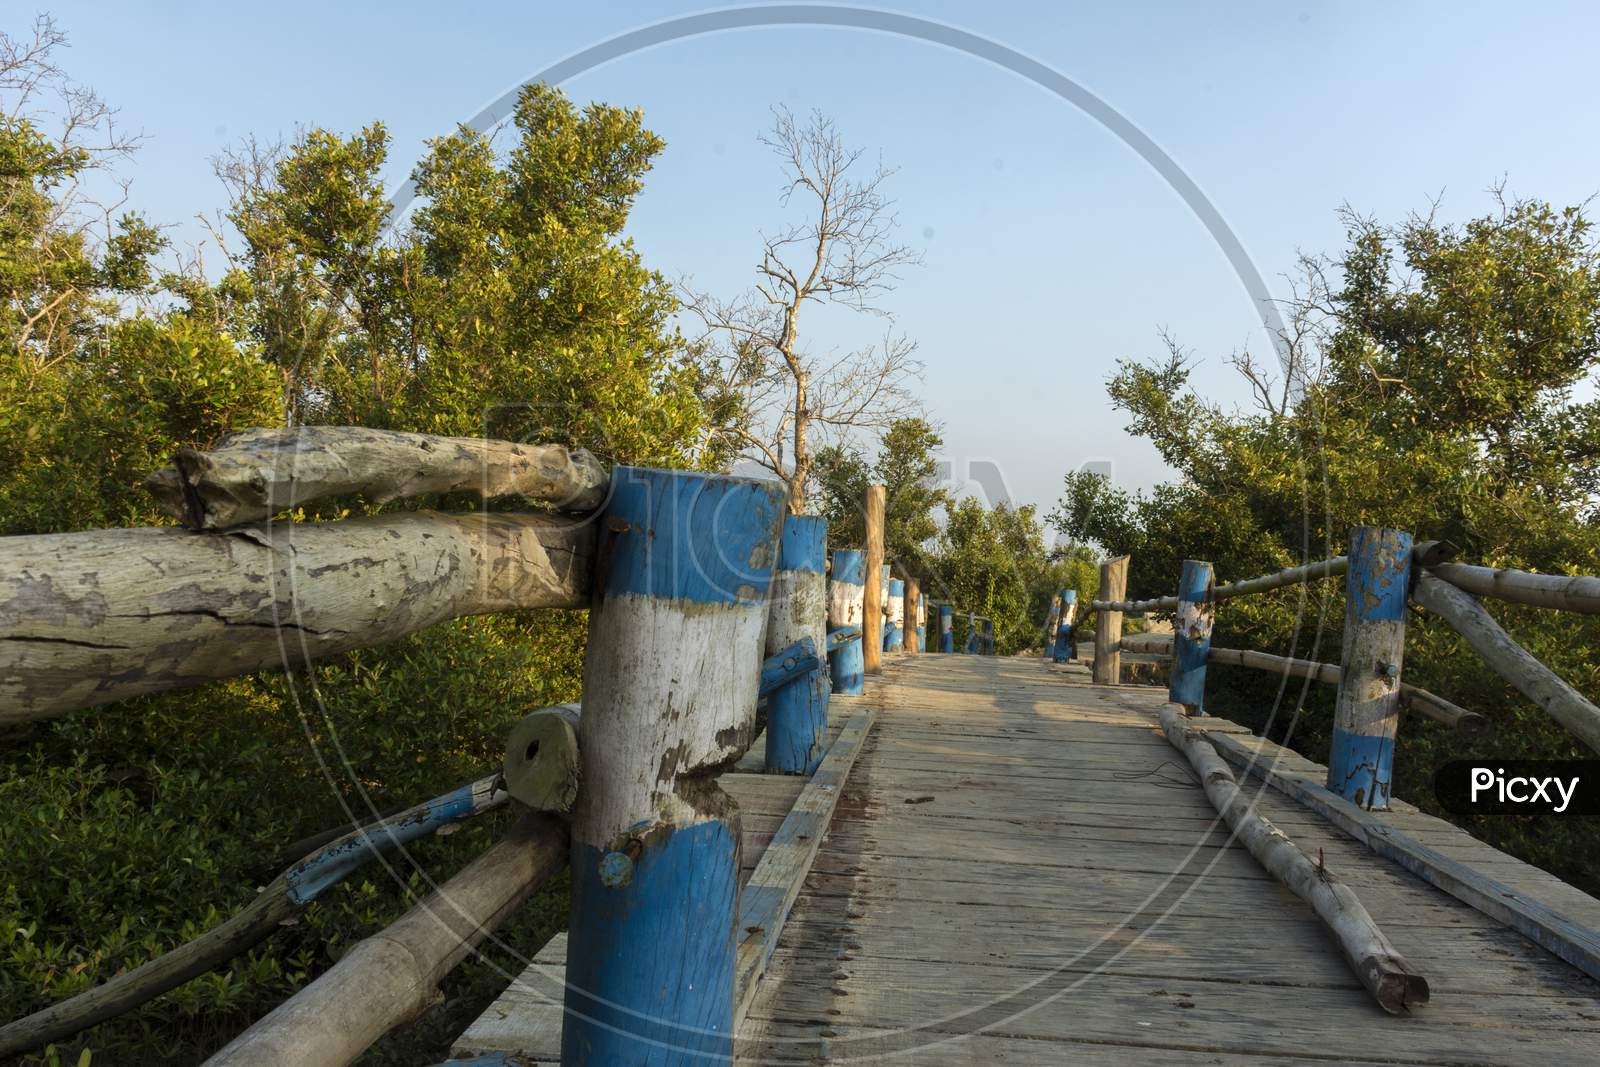 A Bamboo Bridge At The Entry Point Of "Henry Island" Near Bakkhali, 24 Parganas, India.